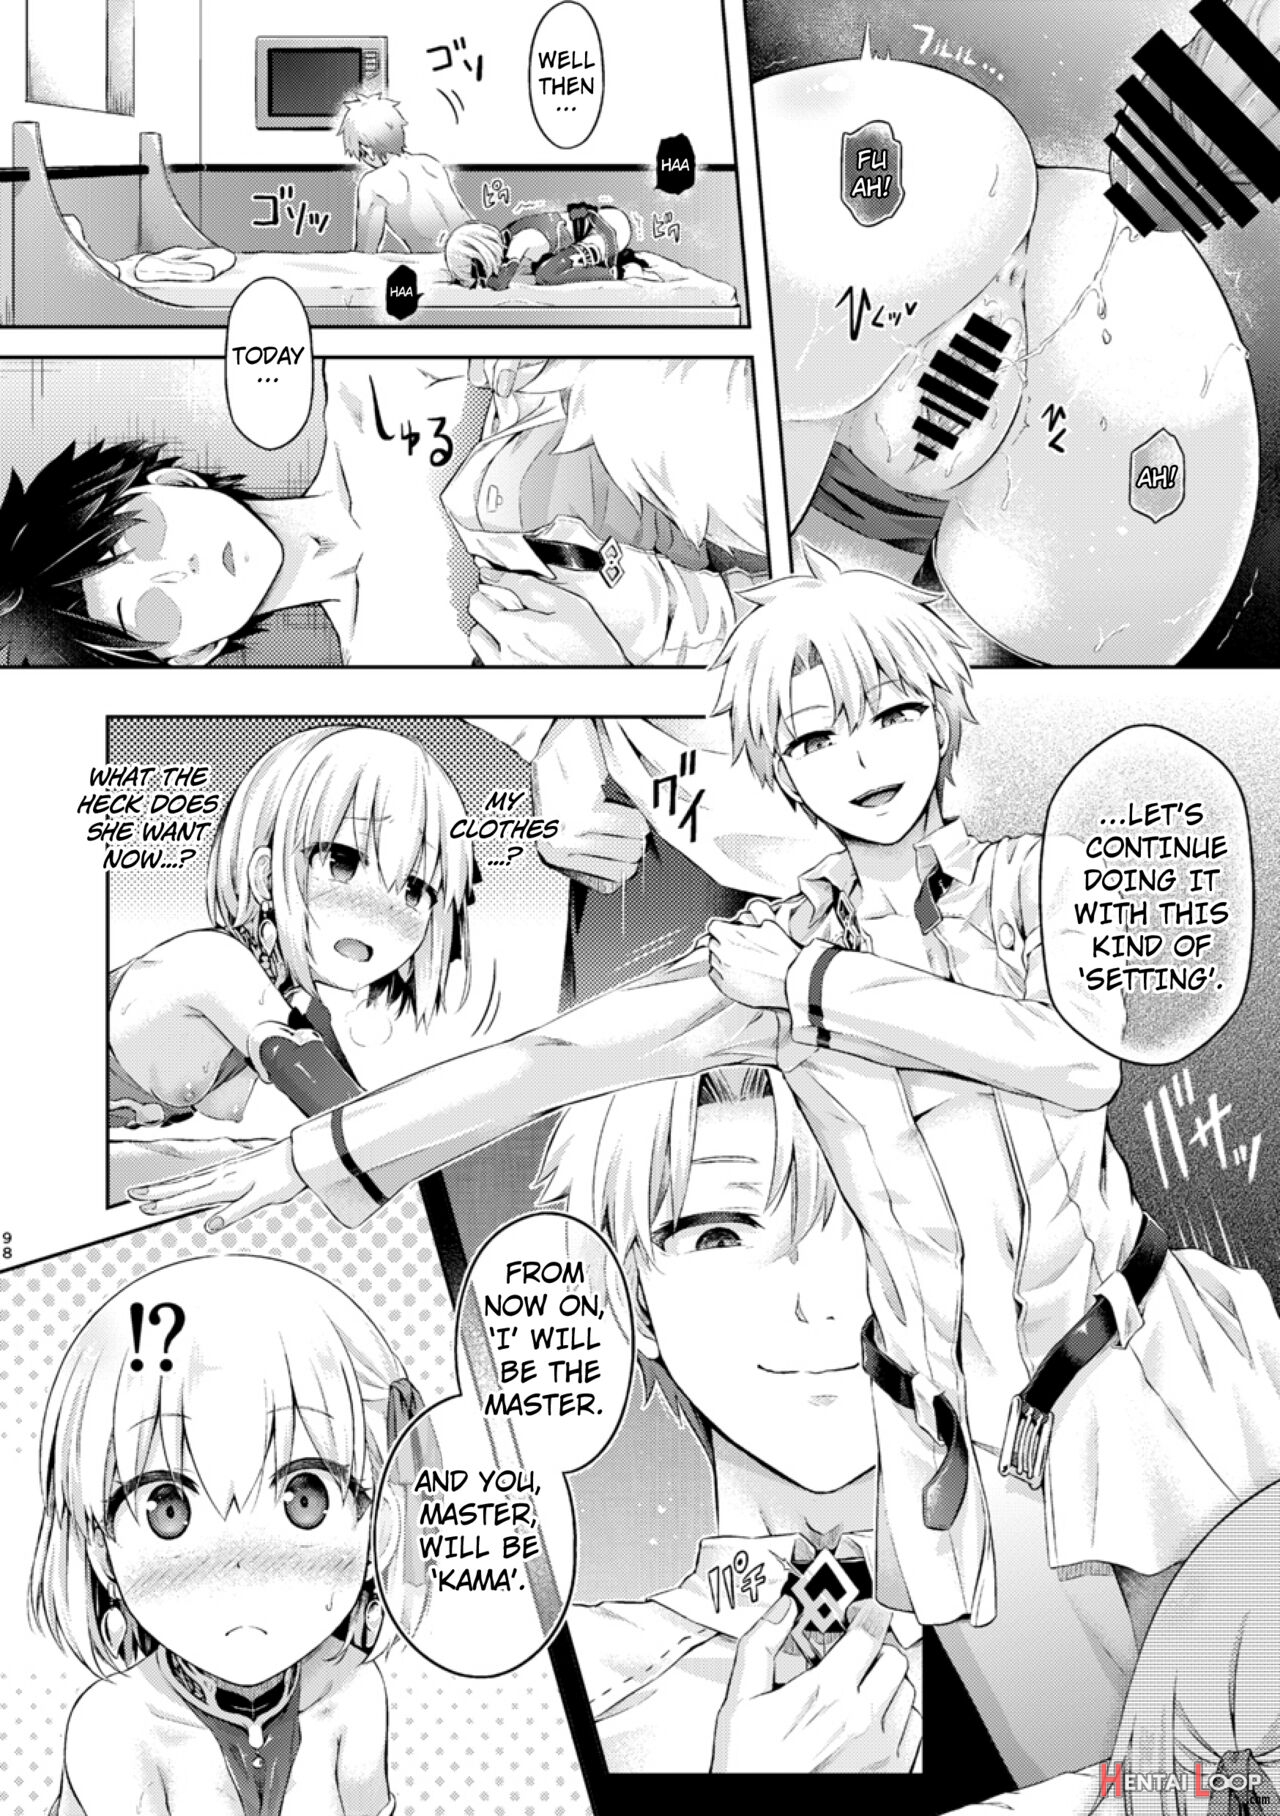 Kimi Ni Naru Chapter 3 ~kama Hen~ English] page 16